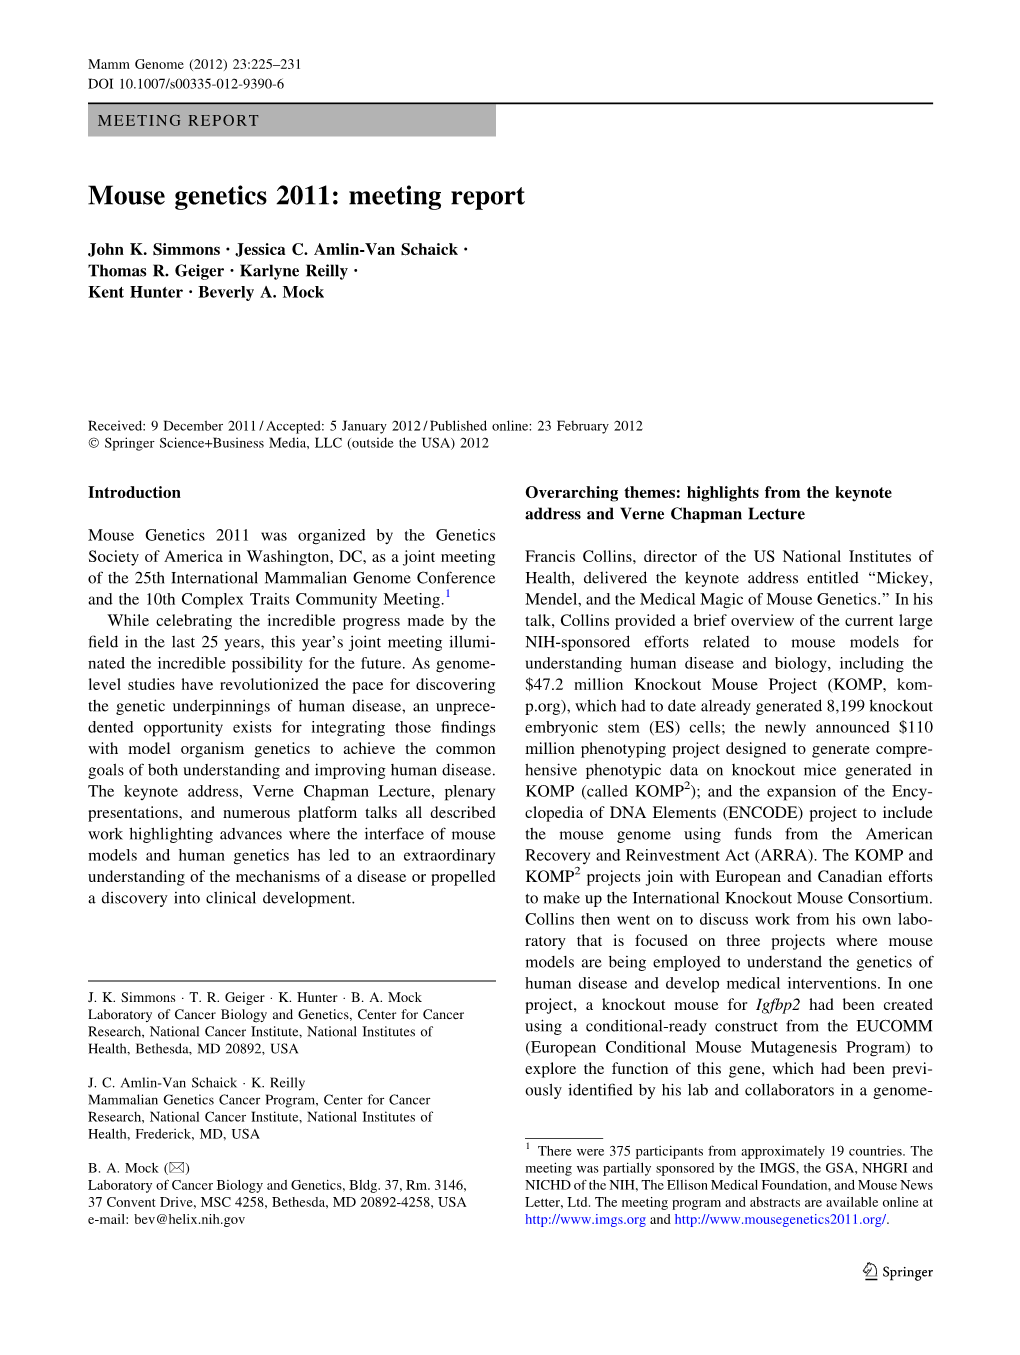 Mouse Genetics 2011: Meeting Report